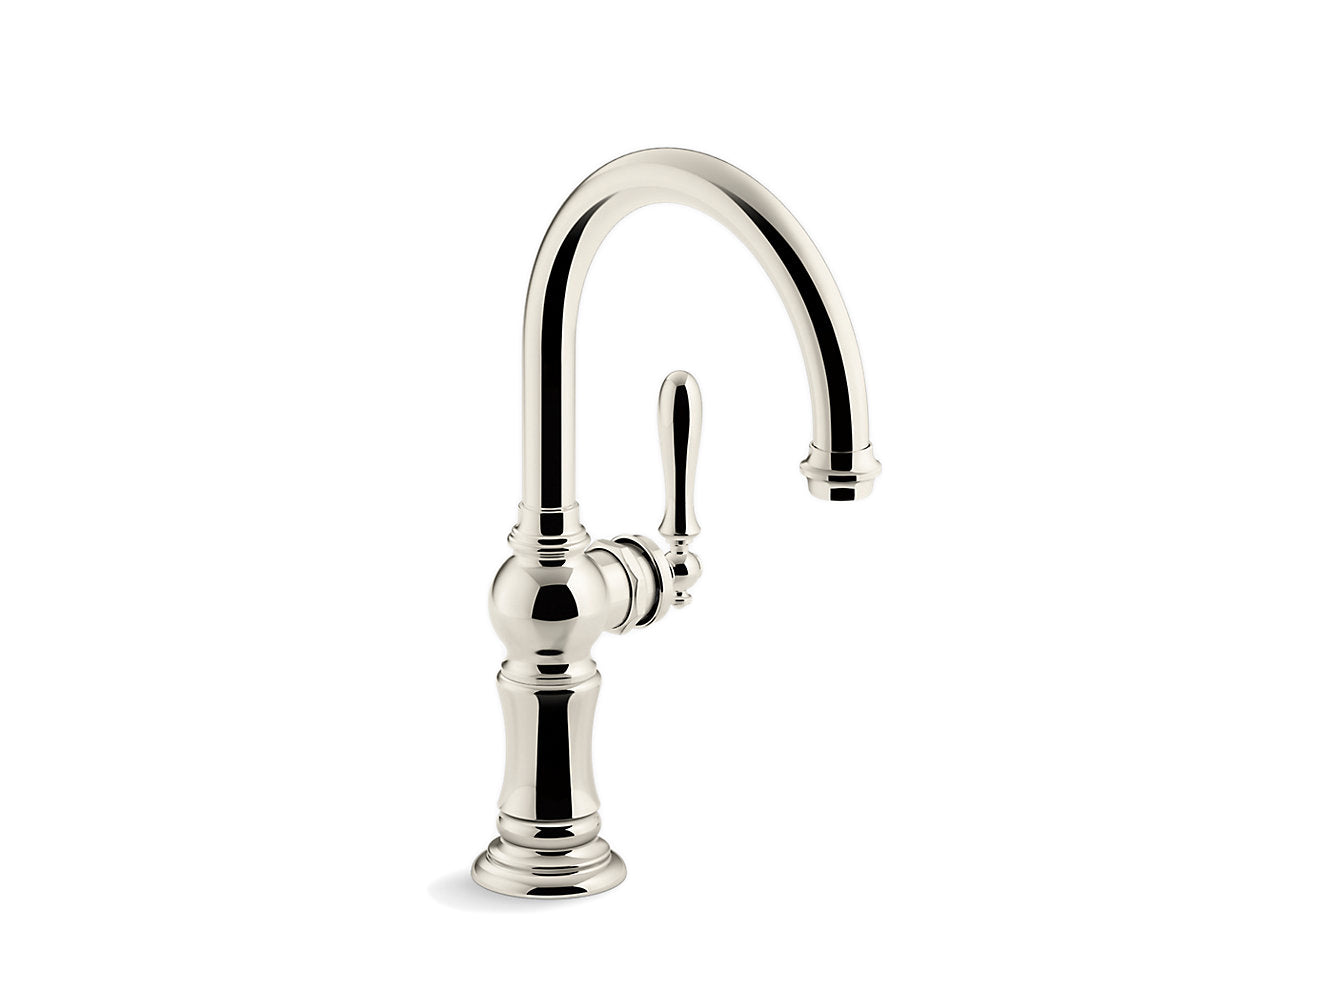 Kohler Artifacts Single Handle Bar Sink Faucet With 13-1/16" Swing Spout Arc Spout Design- Vibrant Polished Nickel